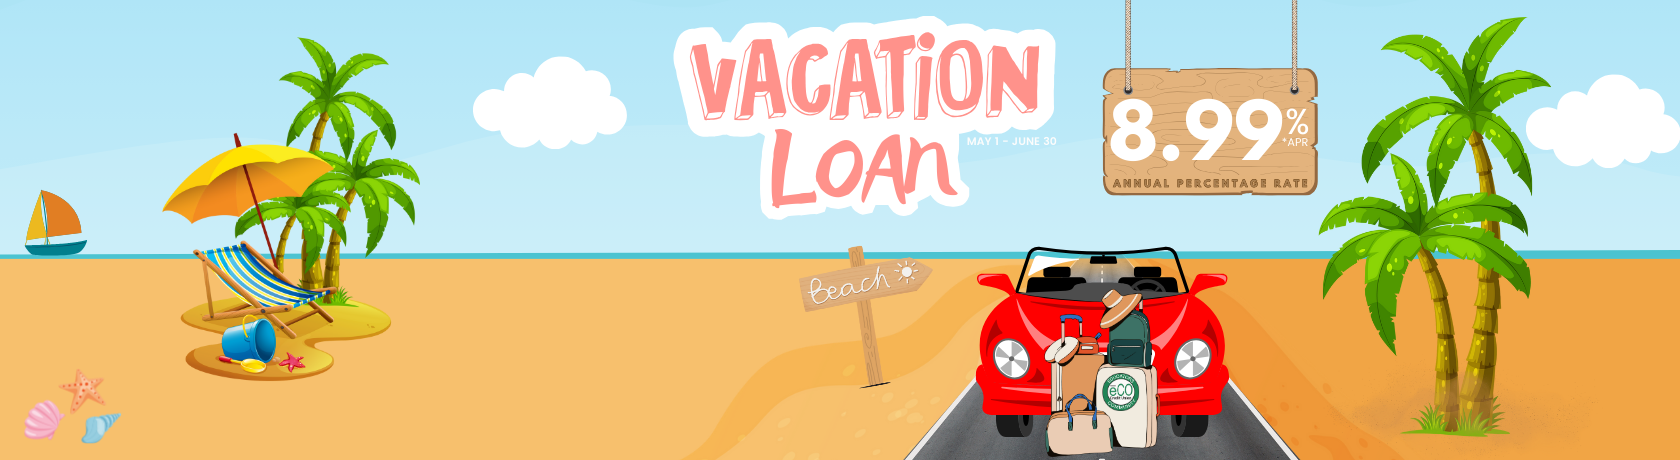 Vacation Loan. 8.99& APR*. May 1 - June 30. 